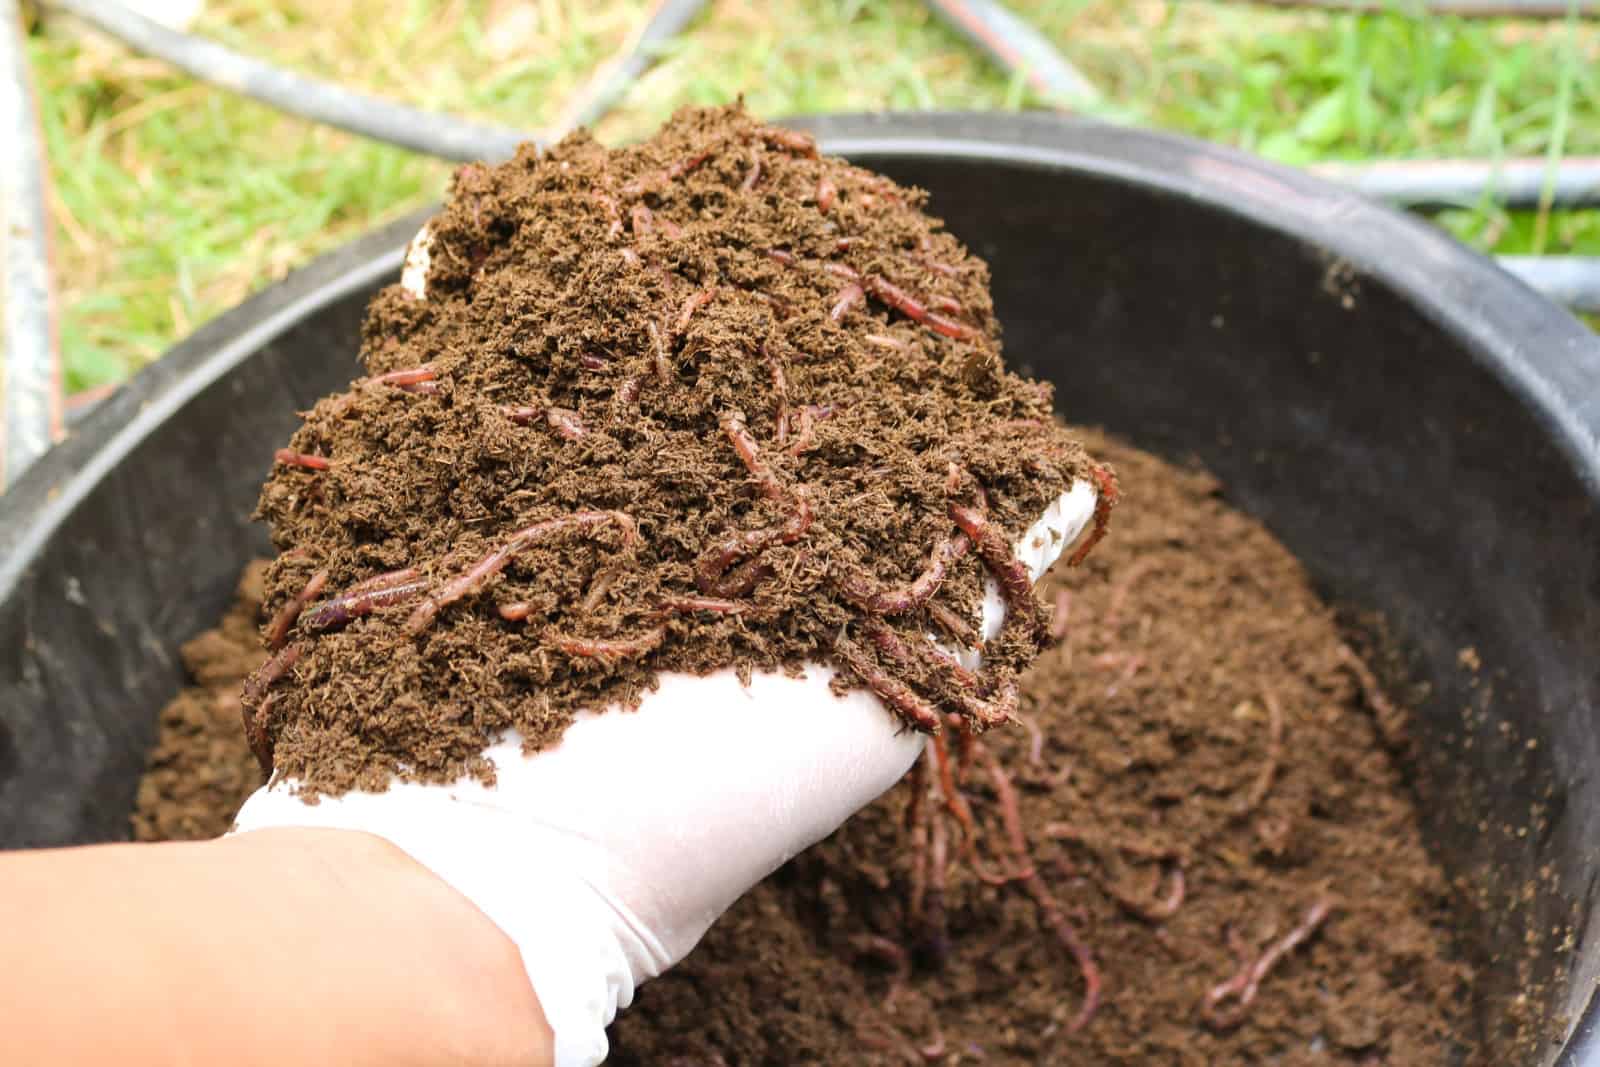 Using earthworm to produce fertile soil and organic farming